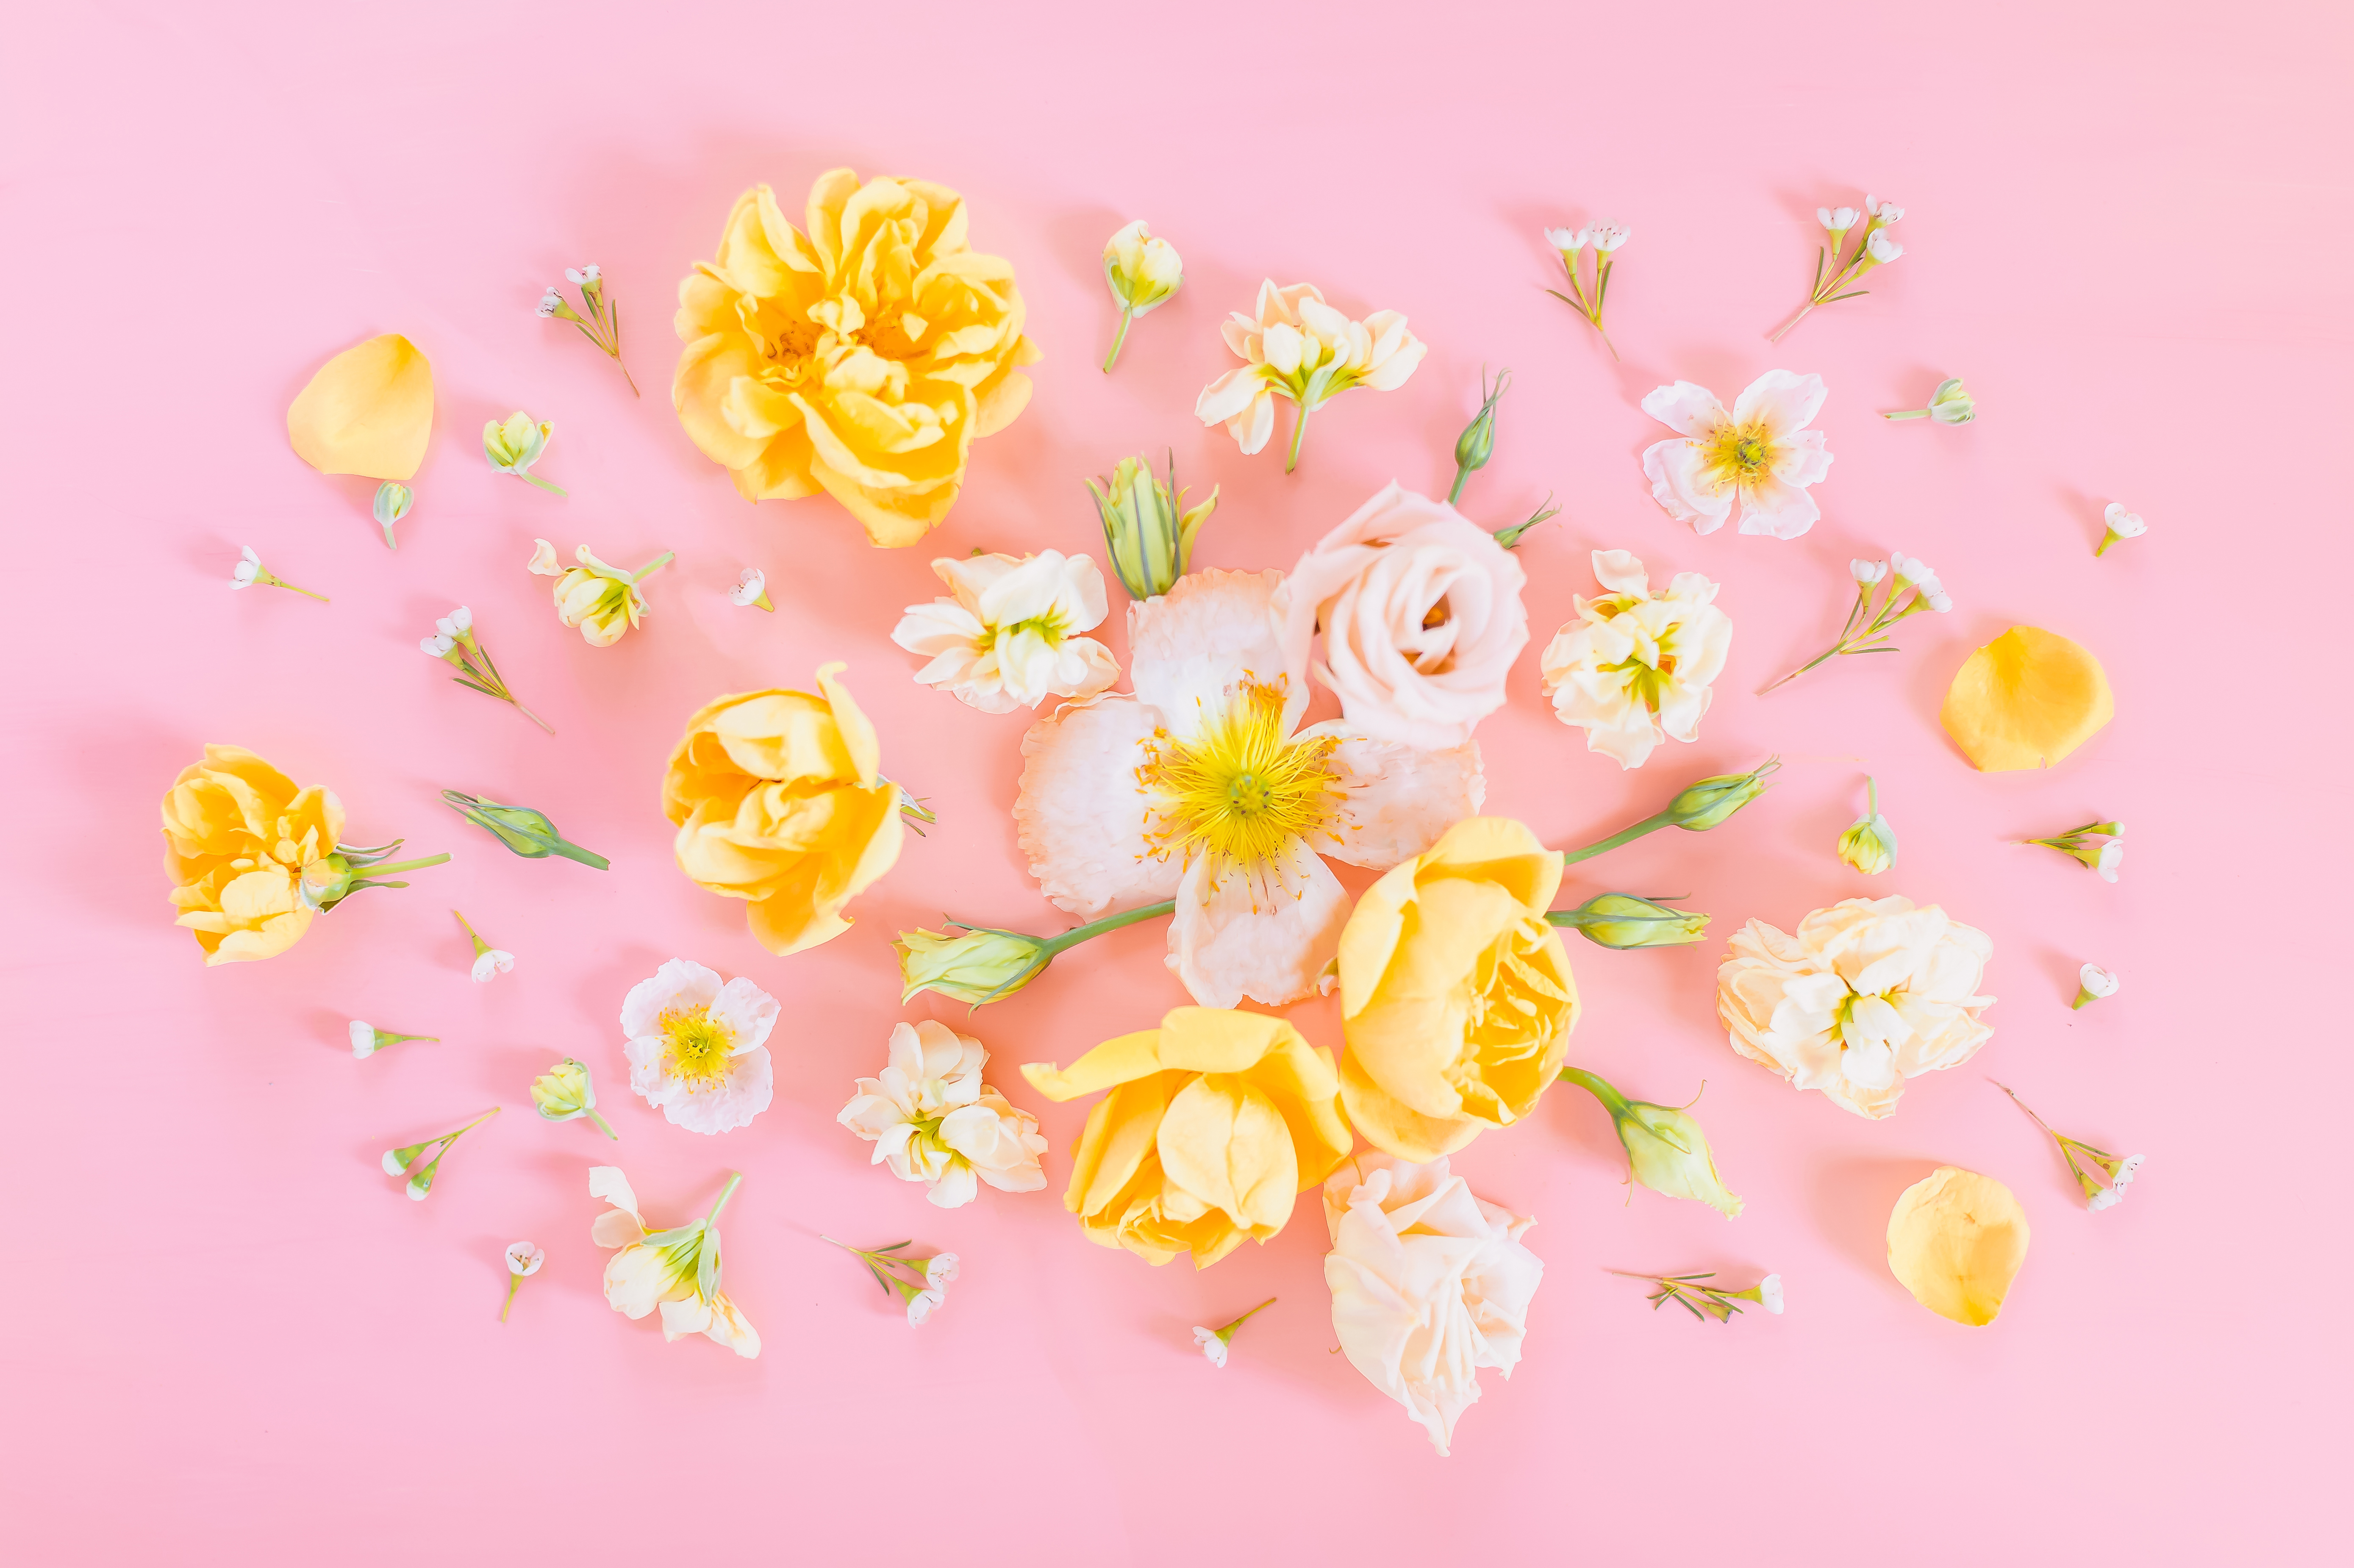 agosto fondo de escritorio,rosado,flor,amarillo,pétalo,planta